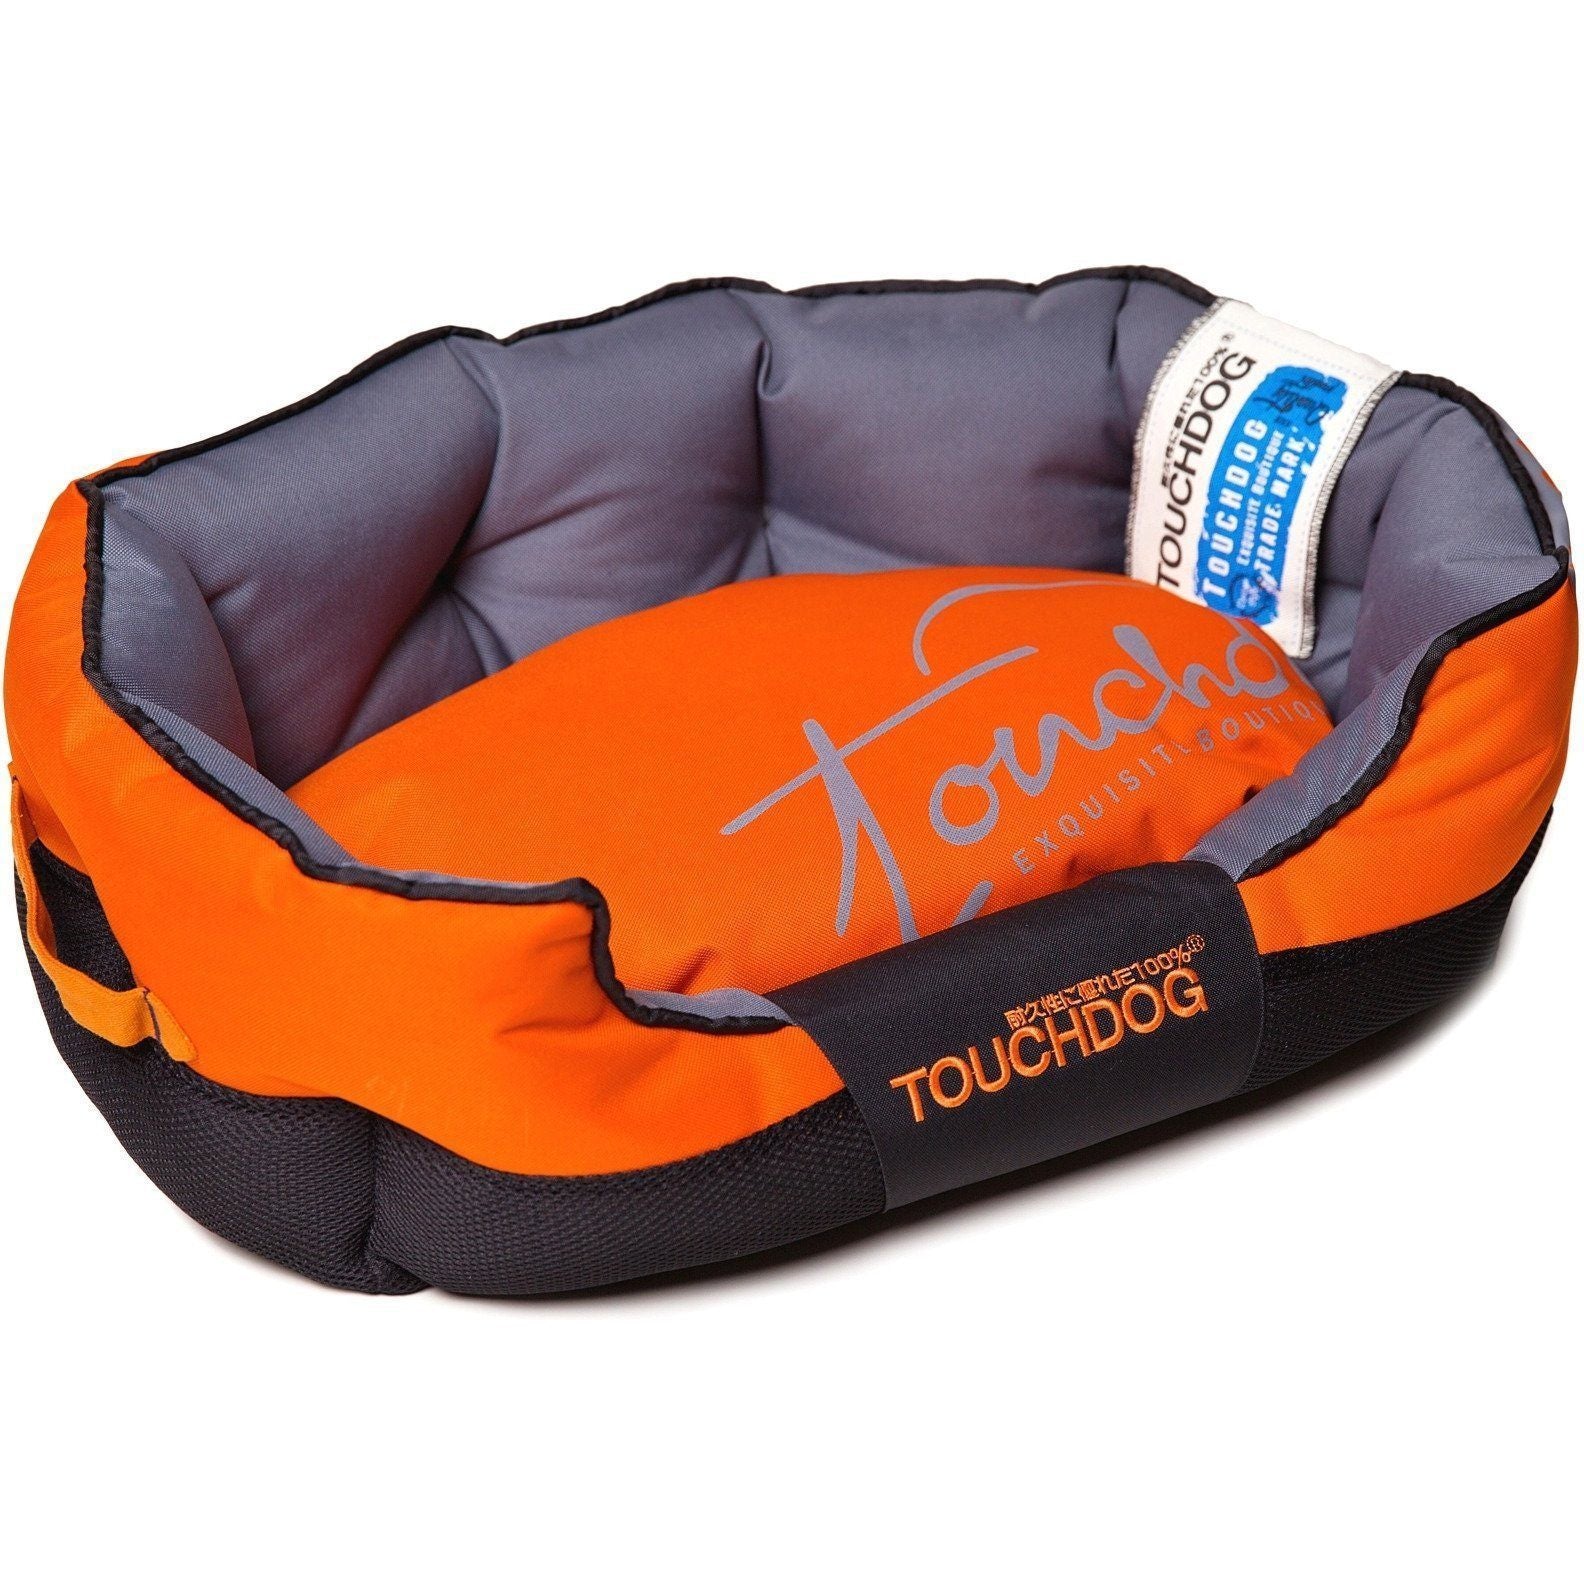 Touchdog ® 'Performance-Max' Sporty Reflective Water-Resistant Dog Bed Medium Sunkist Orange, Black